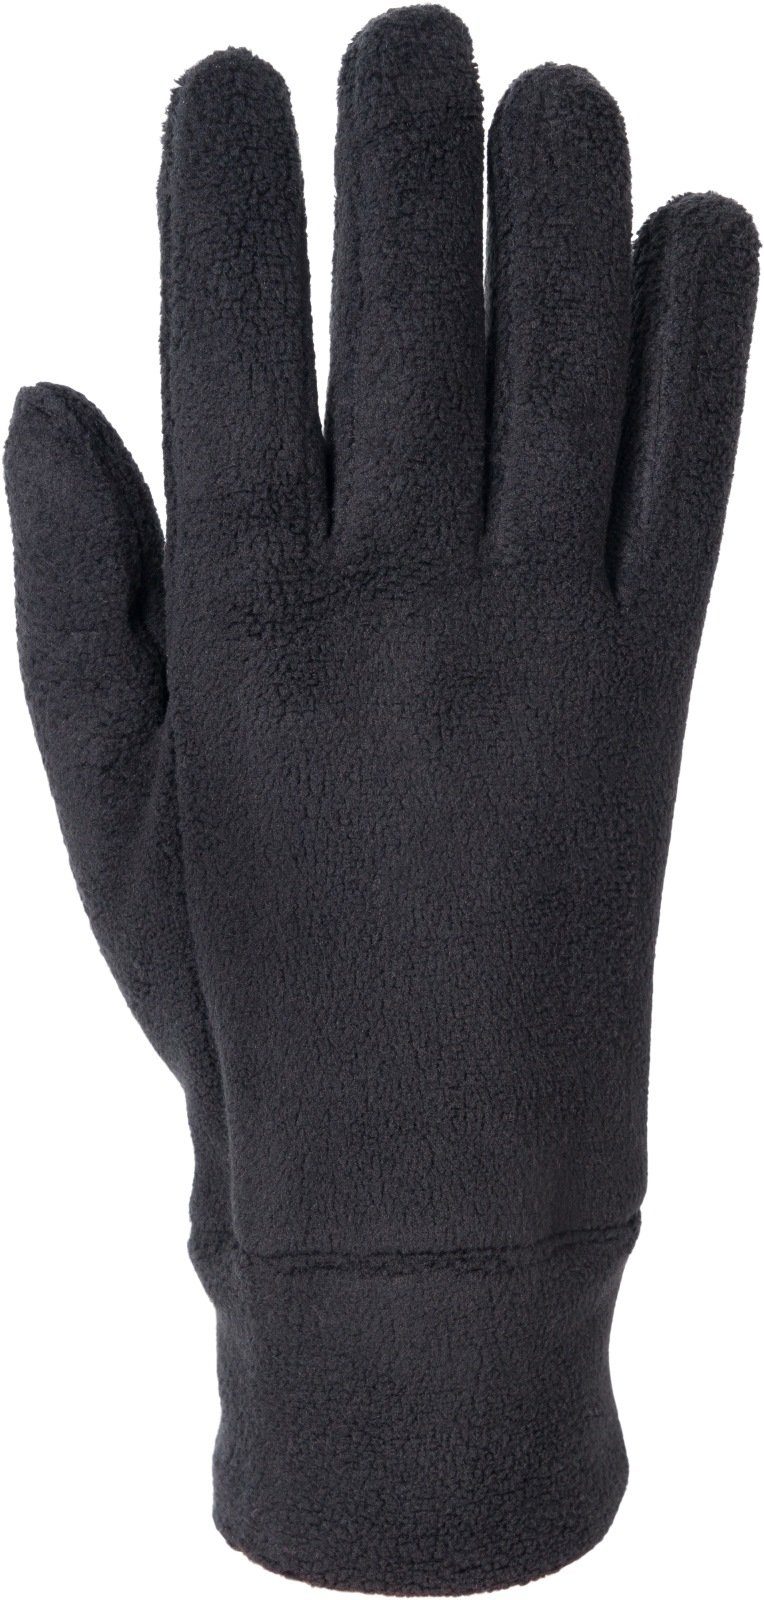 Schwarz Fleecehandschuhe Touchscreen styleBREAKER Fleece Handschuhe Einfarbige